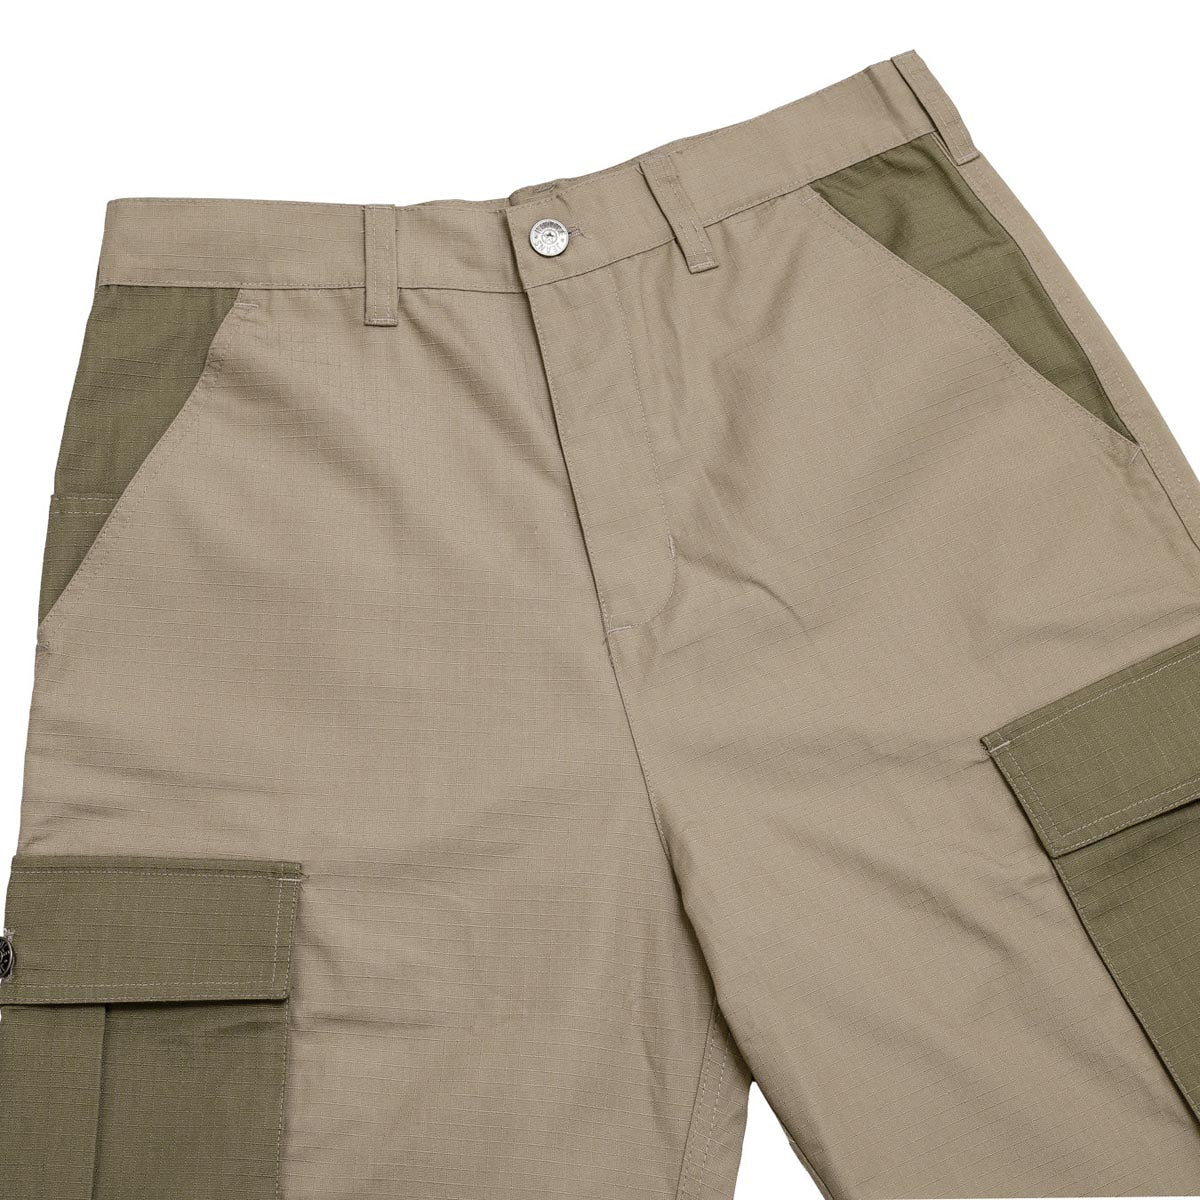 Hoddle Pleated Rip Stop Cargo Pants - Tan/Khaki image 3